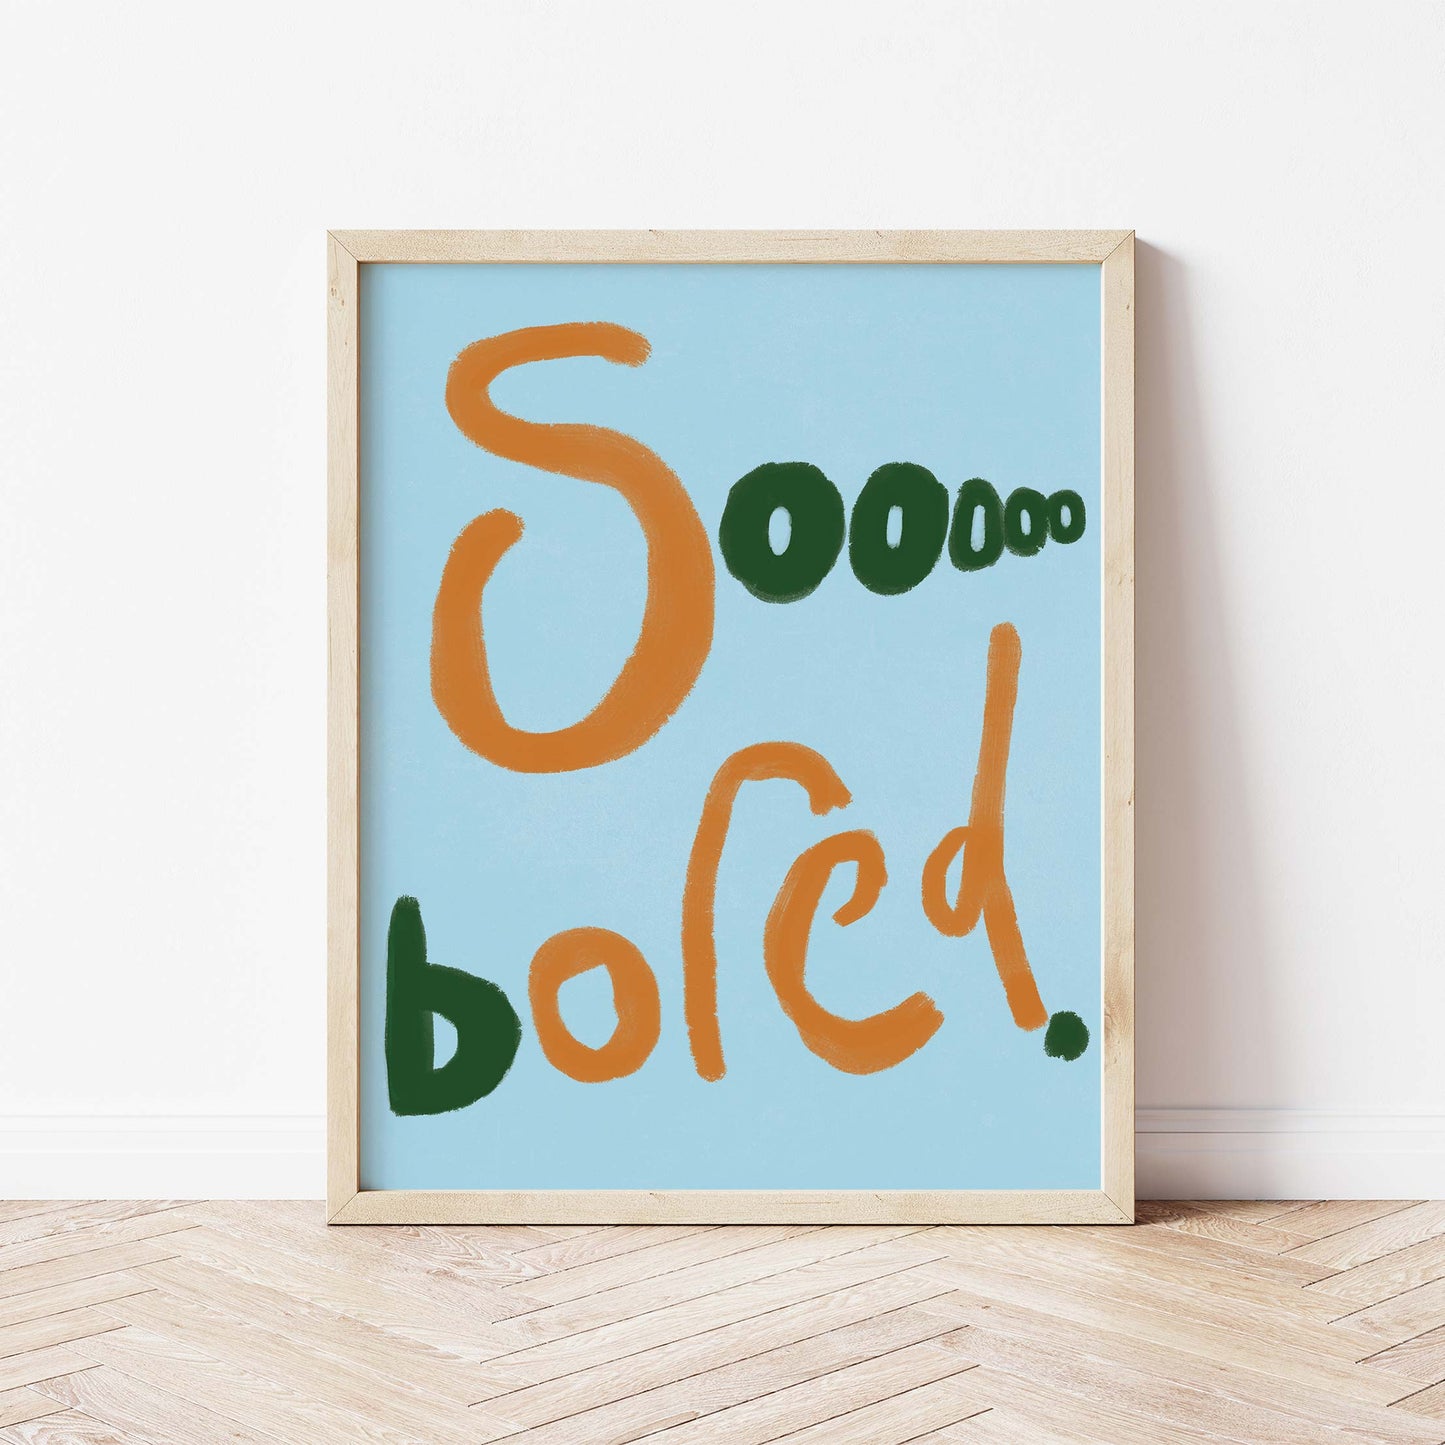 Sooooo Bored Print - Blue, Brown, Dark Green Framed Print